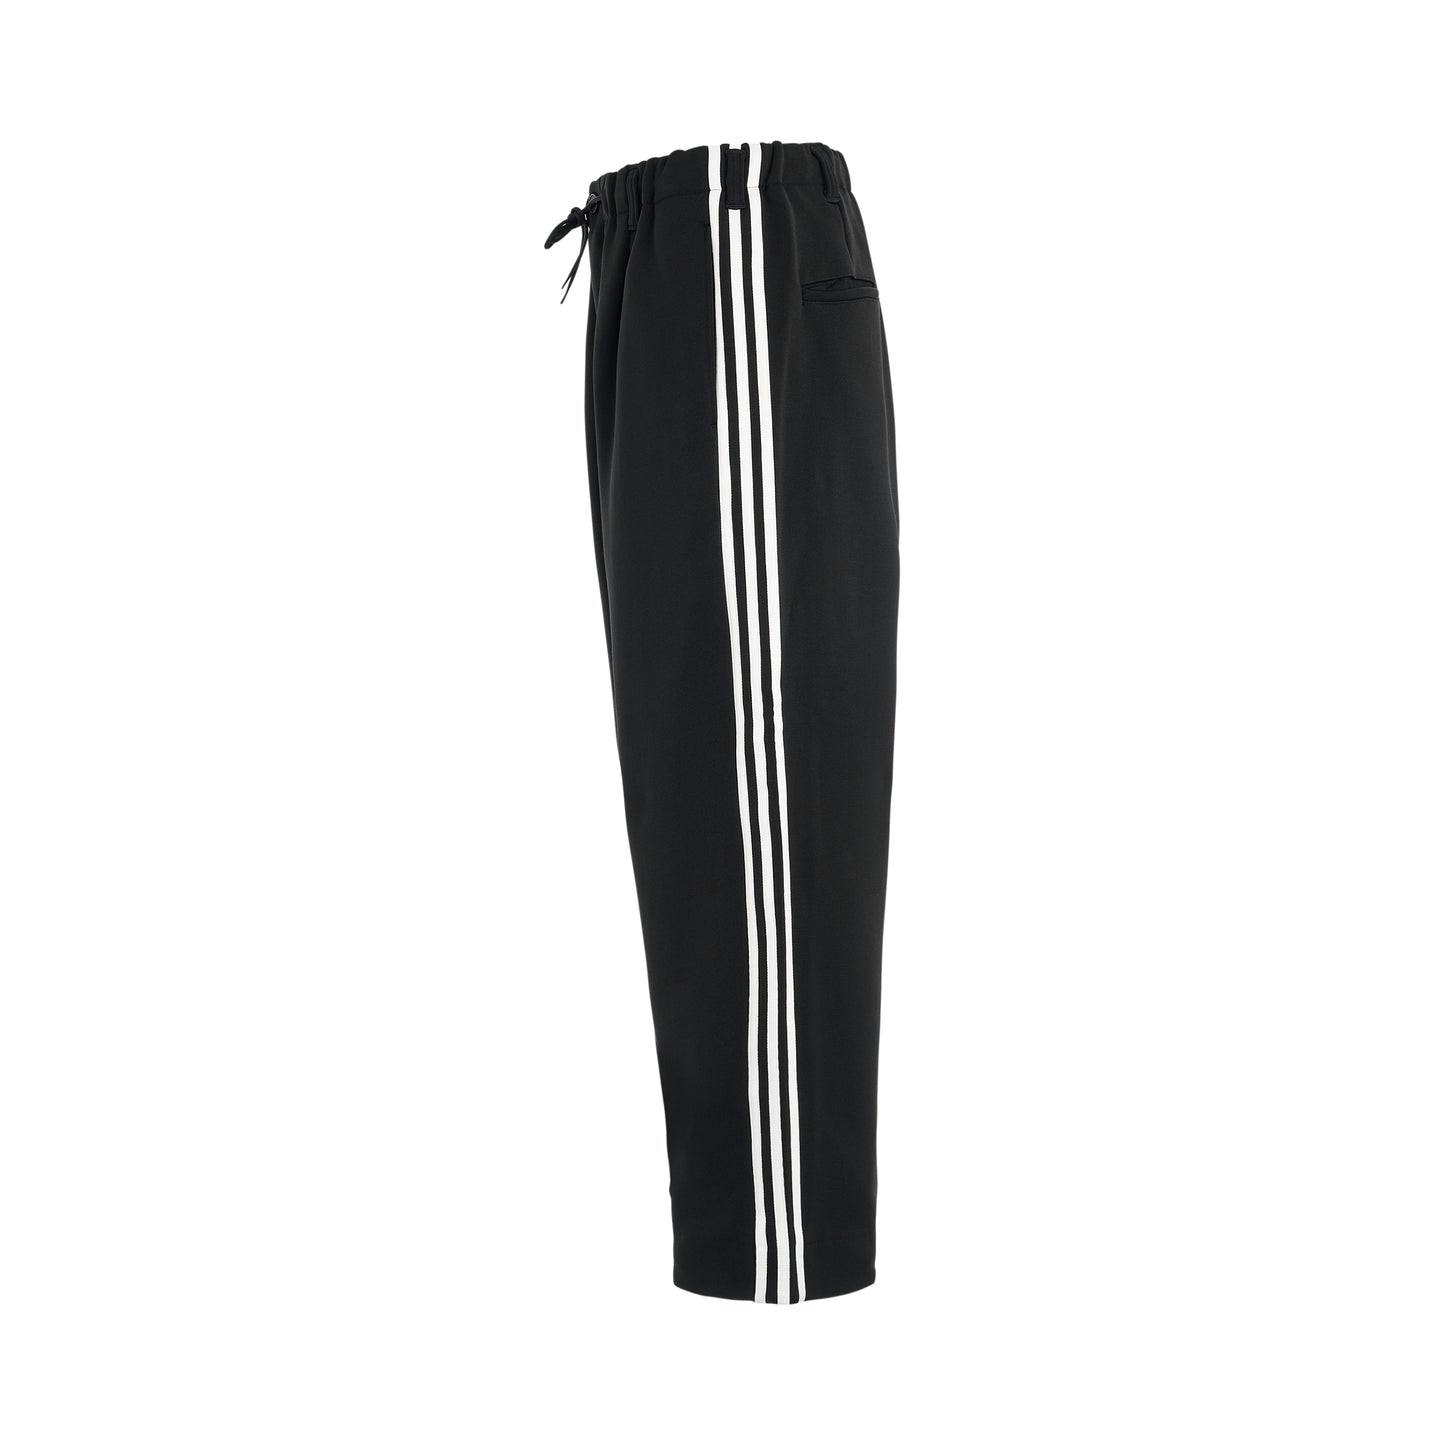 3 Stripe Straight Track Pants in Black/Off White